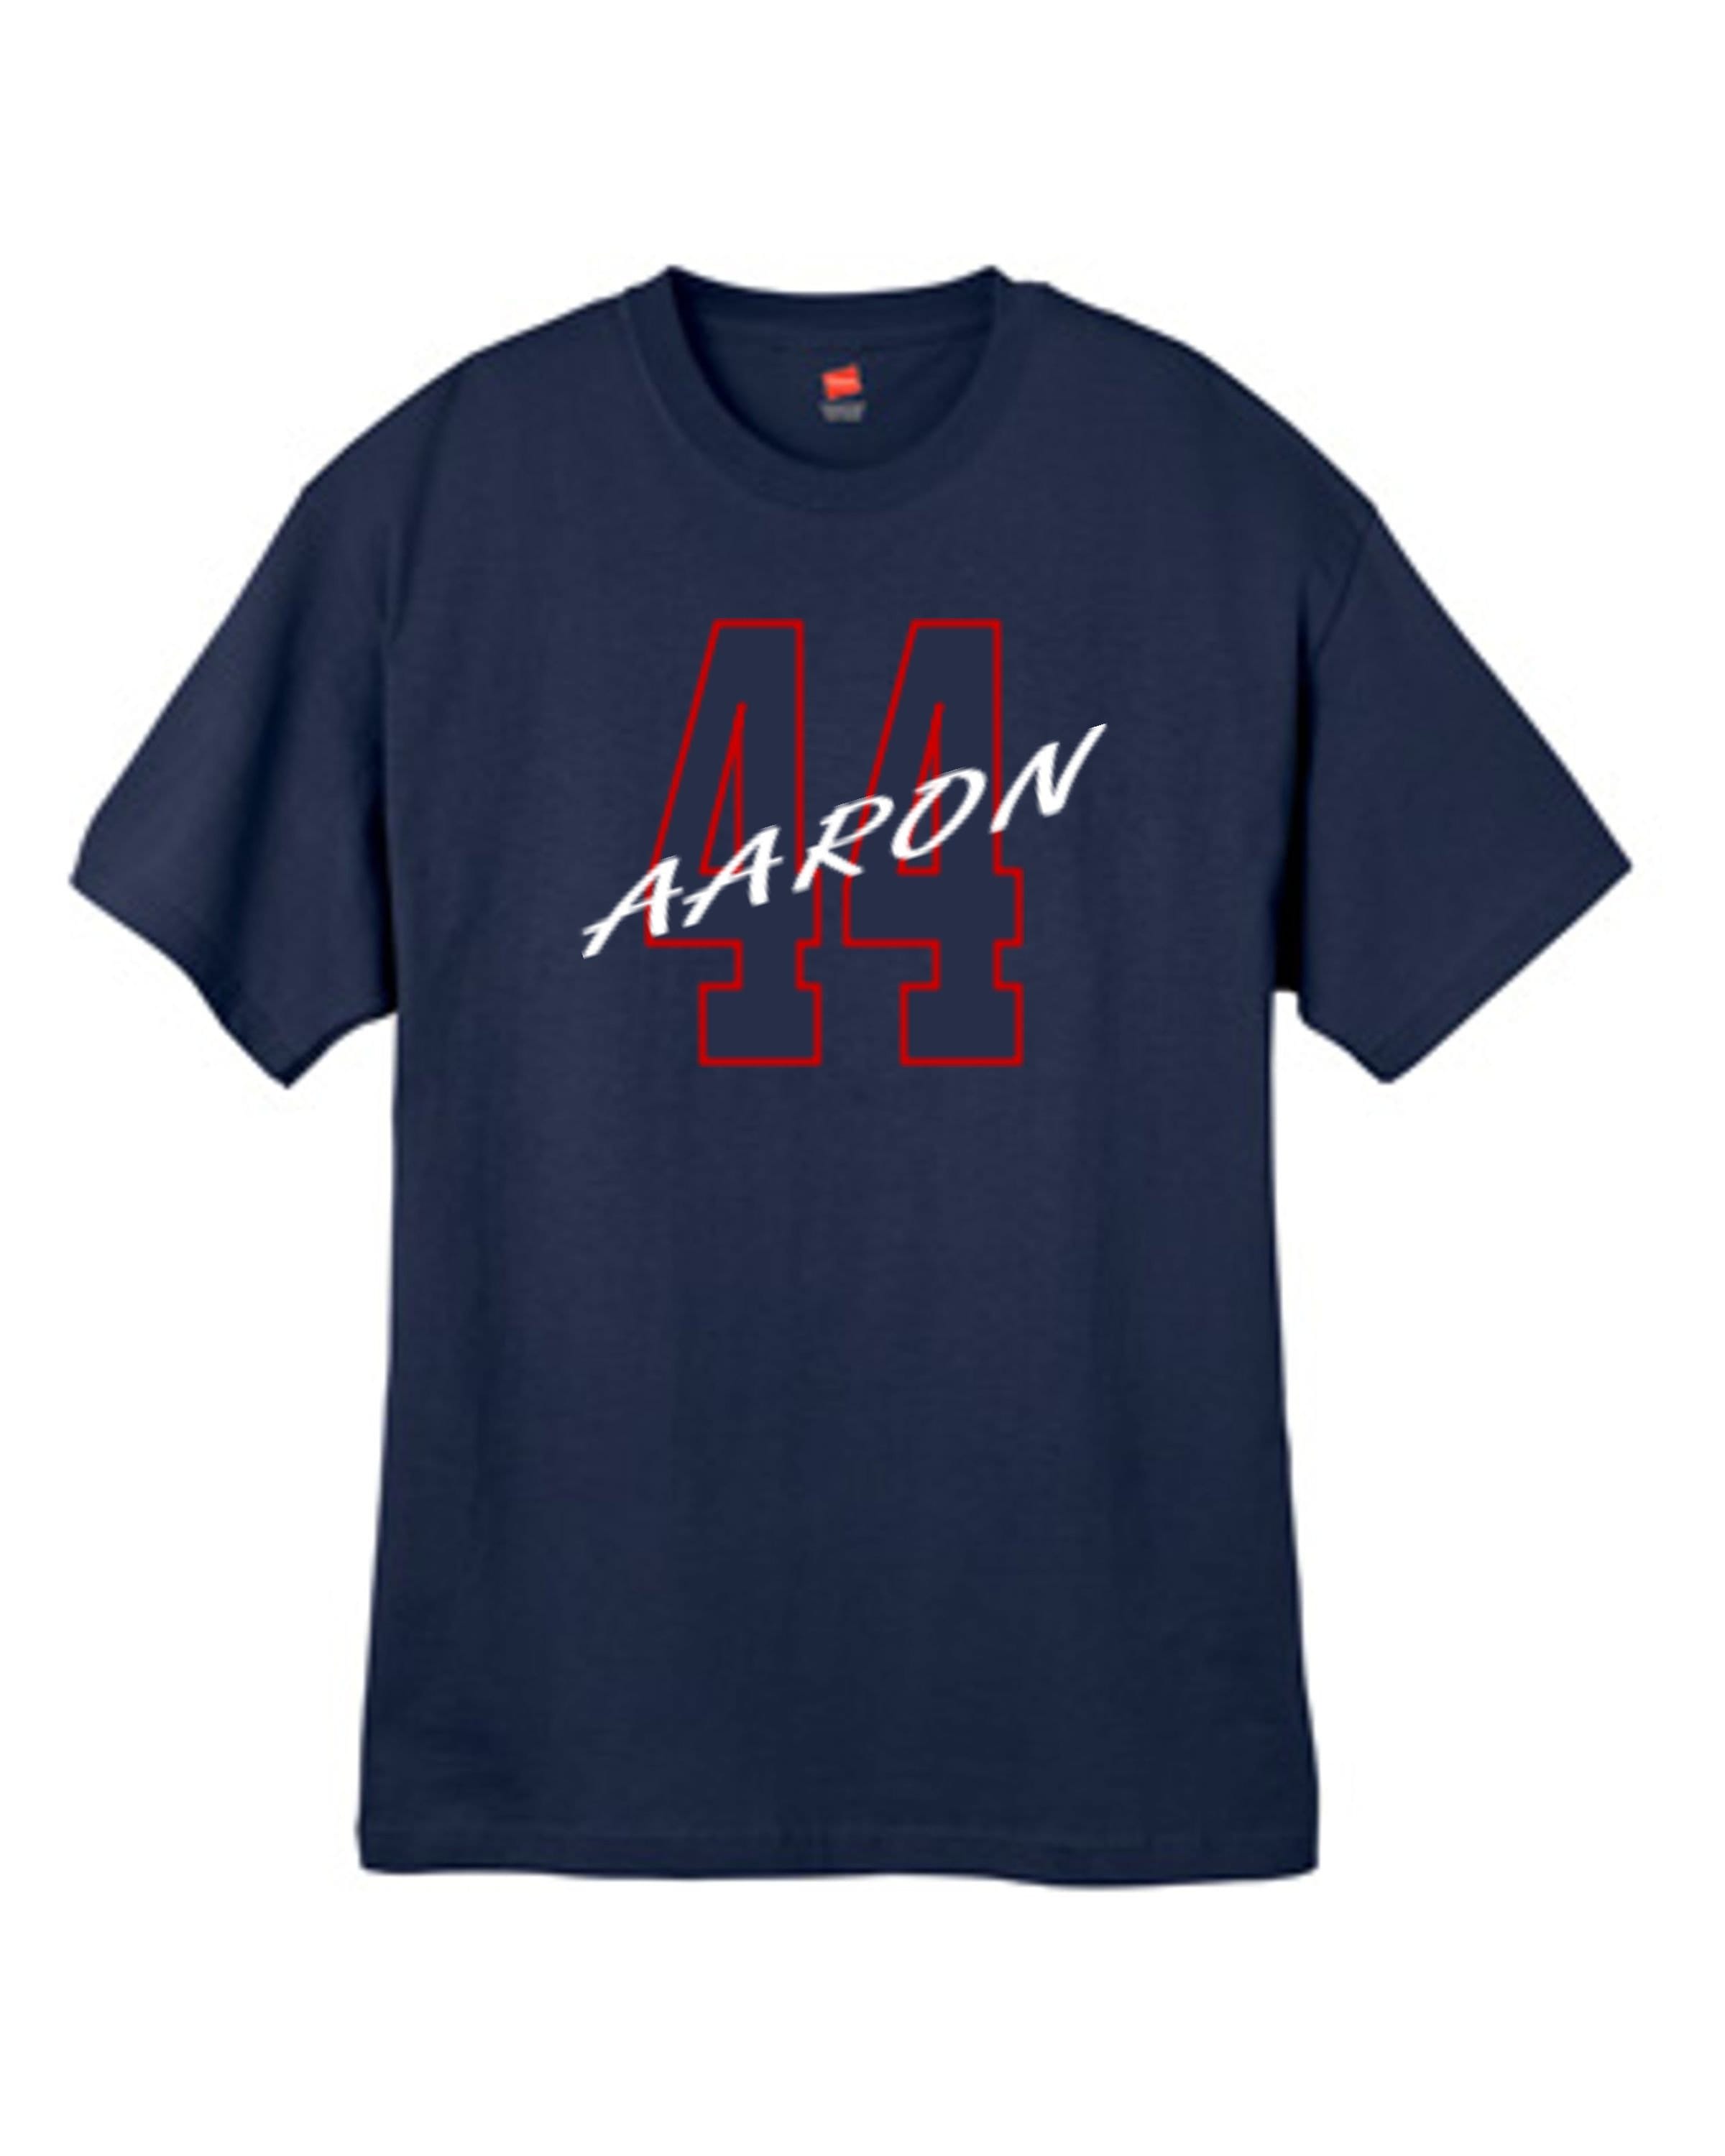 Hank Aaron Number 44 Jersey Atlanta Braves Inspired Sticker by